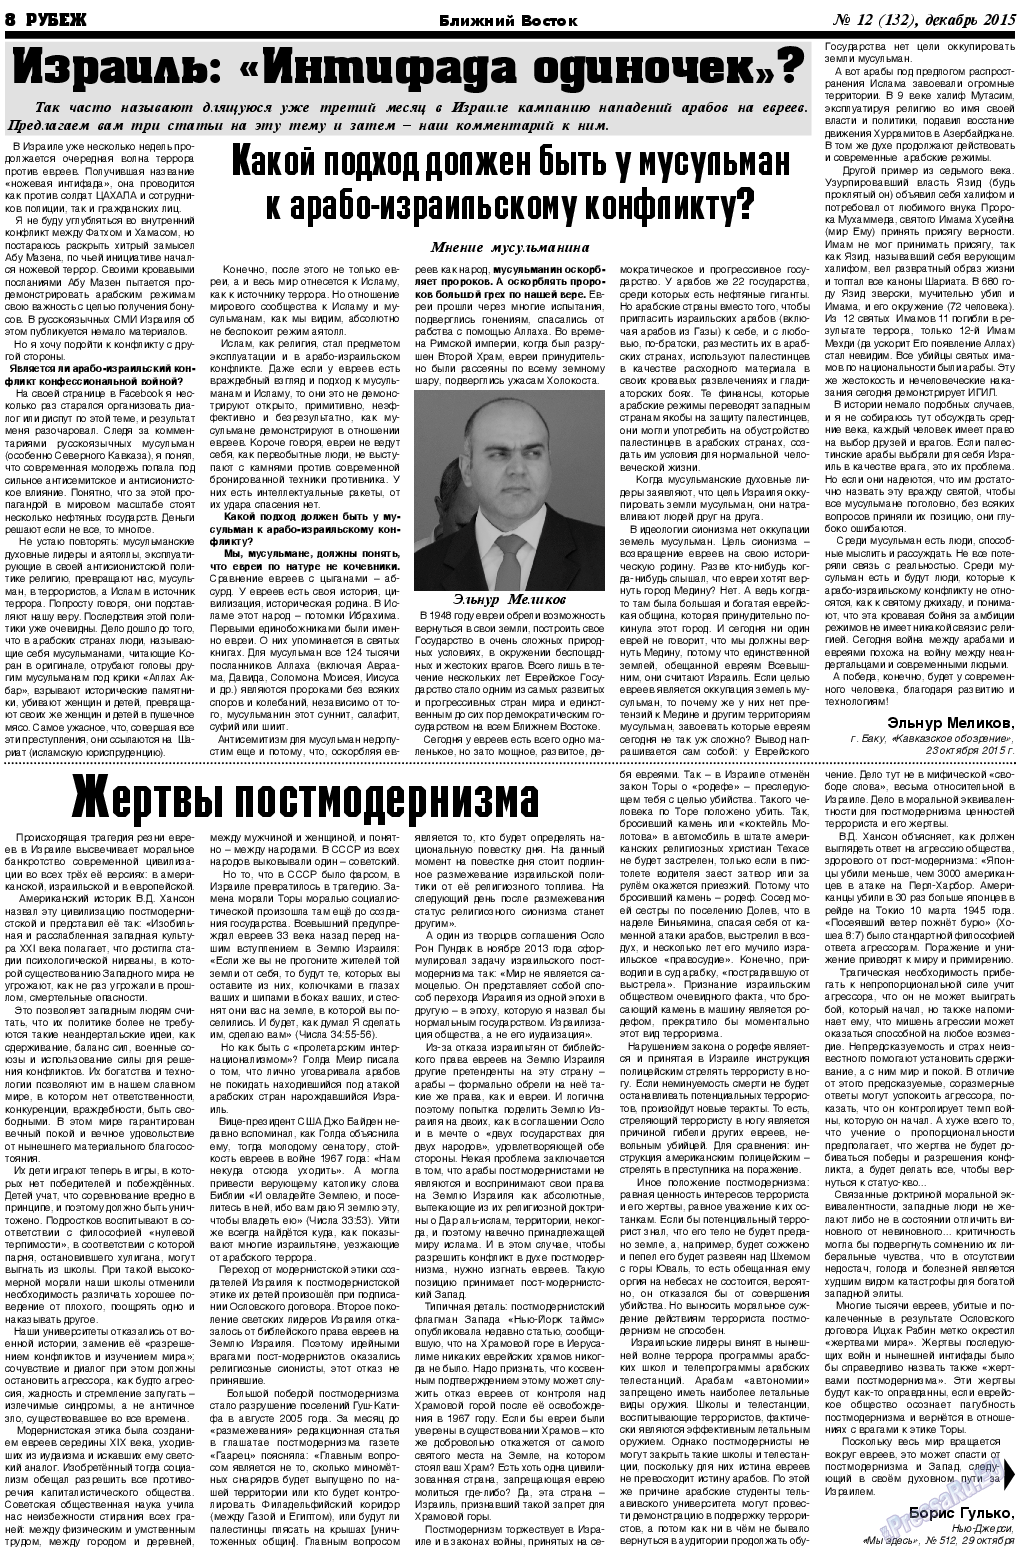 Рубеж, газета. 2015 №12 стр.8